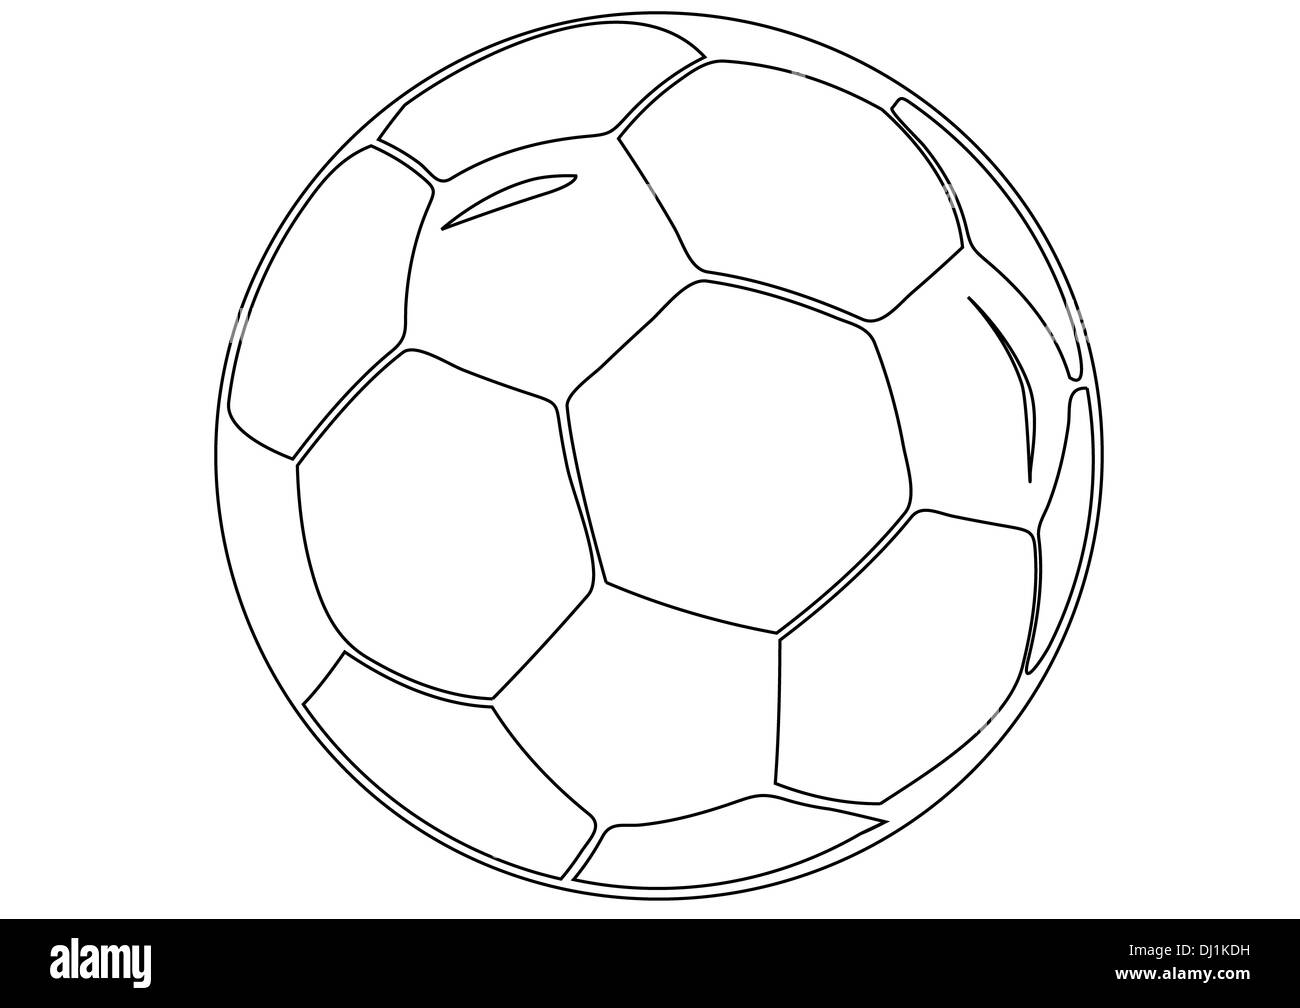 Free Vector  Handball player in sketch style